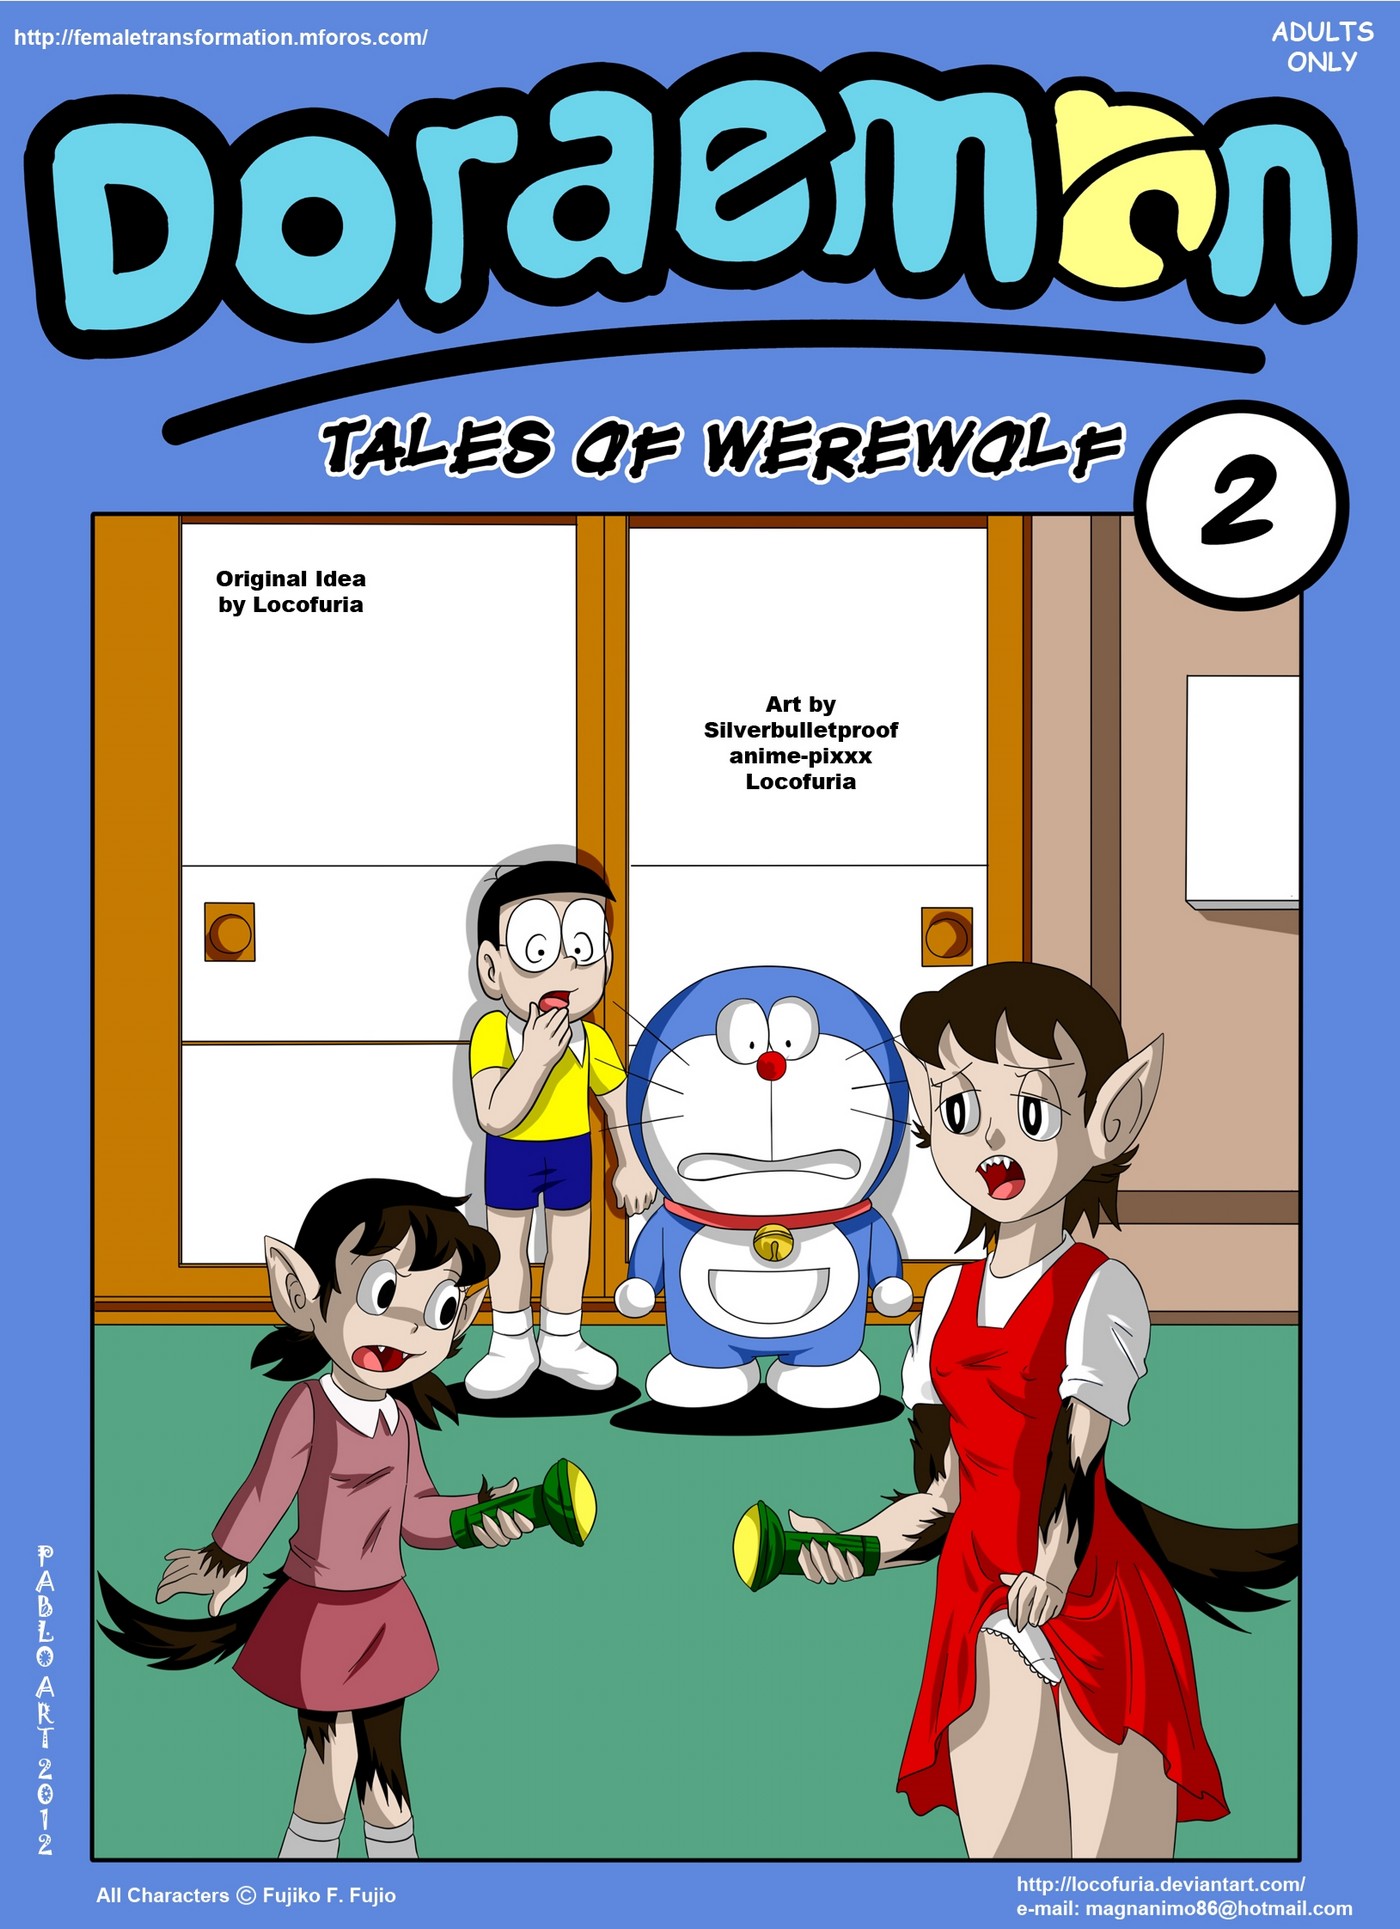 Doraemon Porn - Doraemon Tales of Werewolf 2 - KingComiX.com